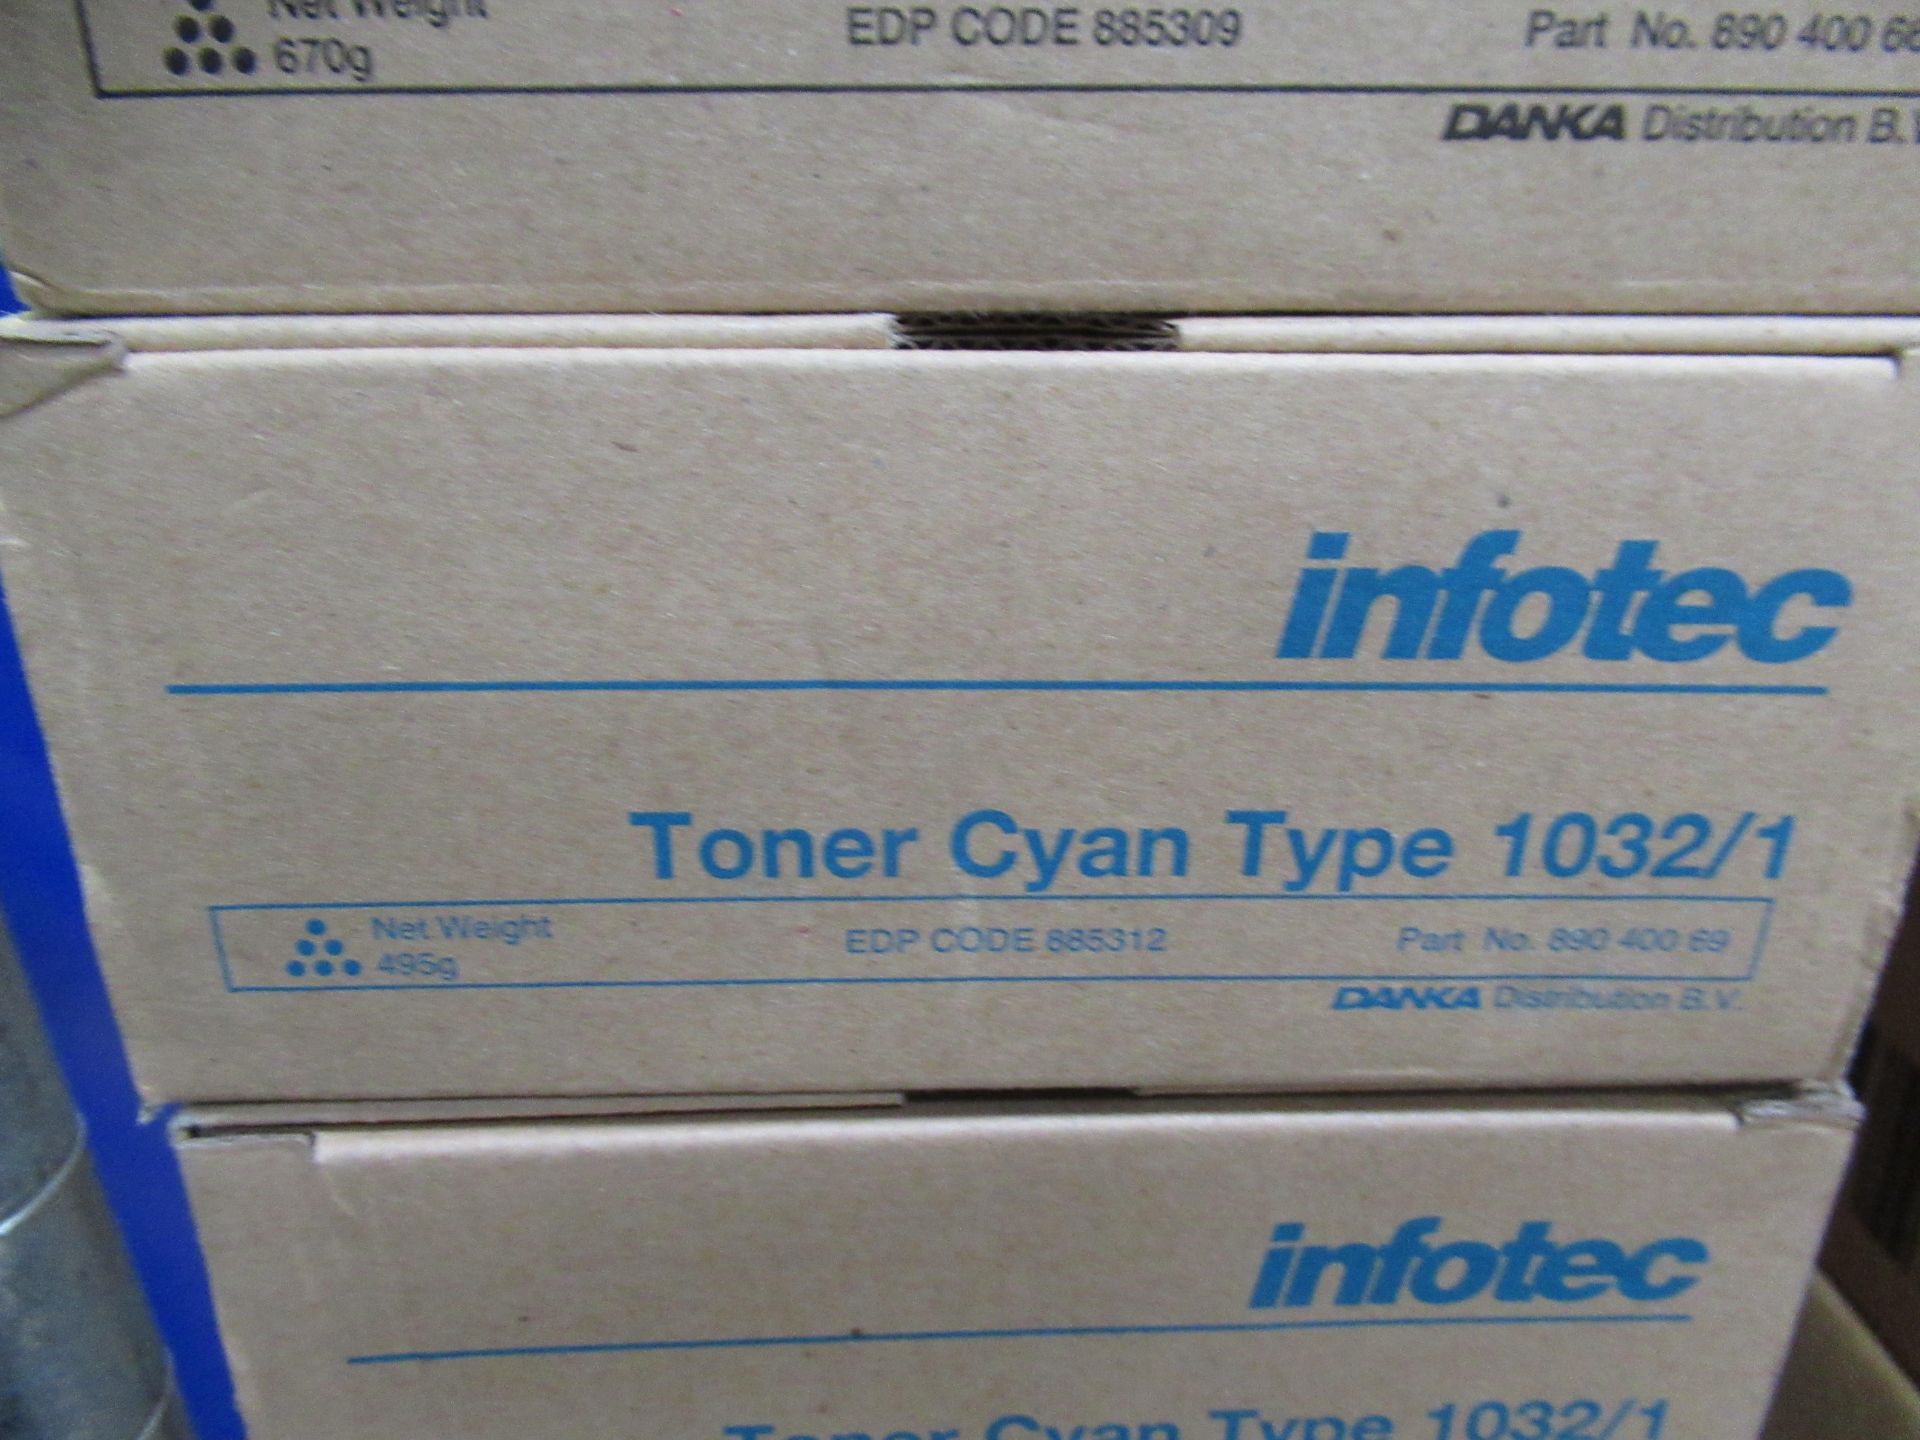 6x Infotec 1032/1 toner cartridges - Image 4 of 4